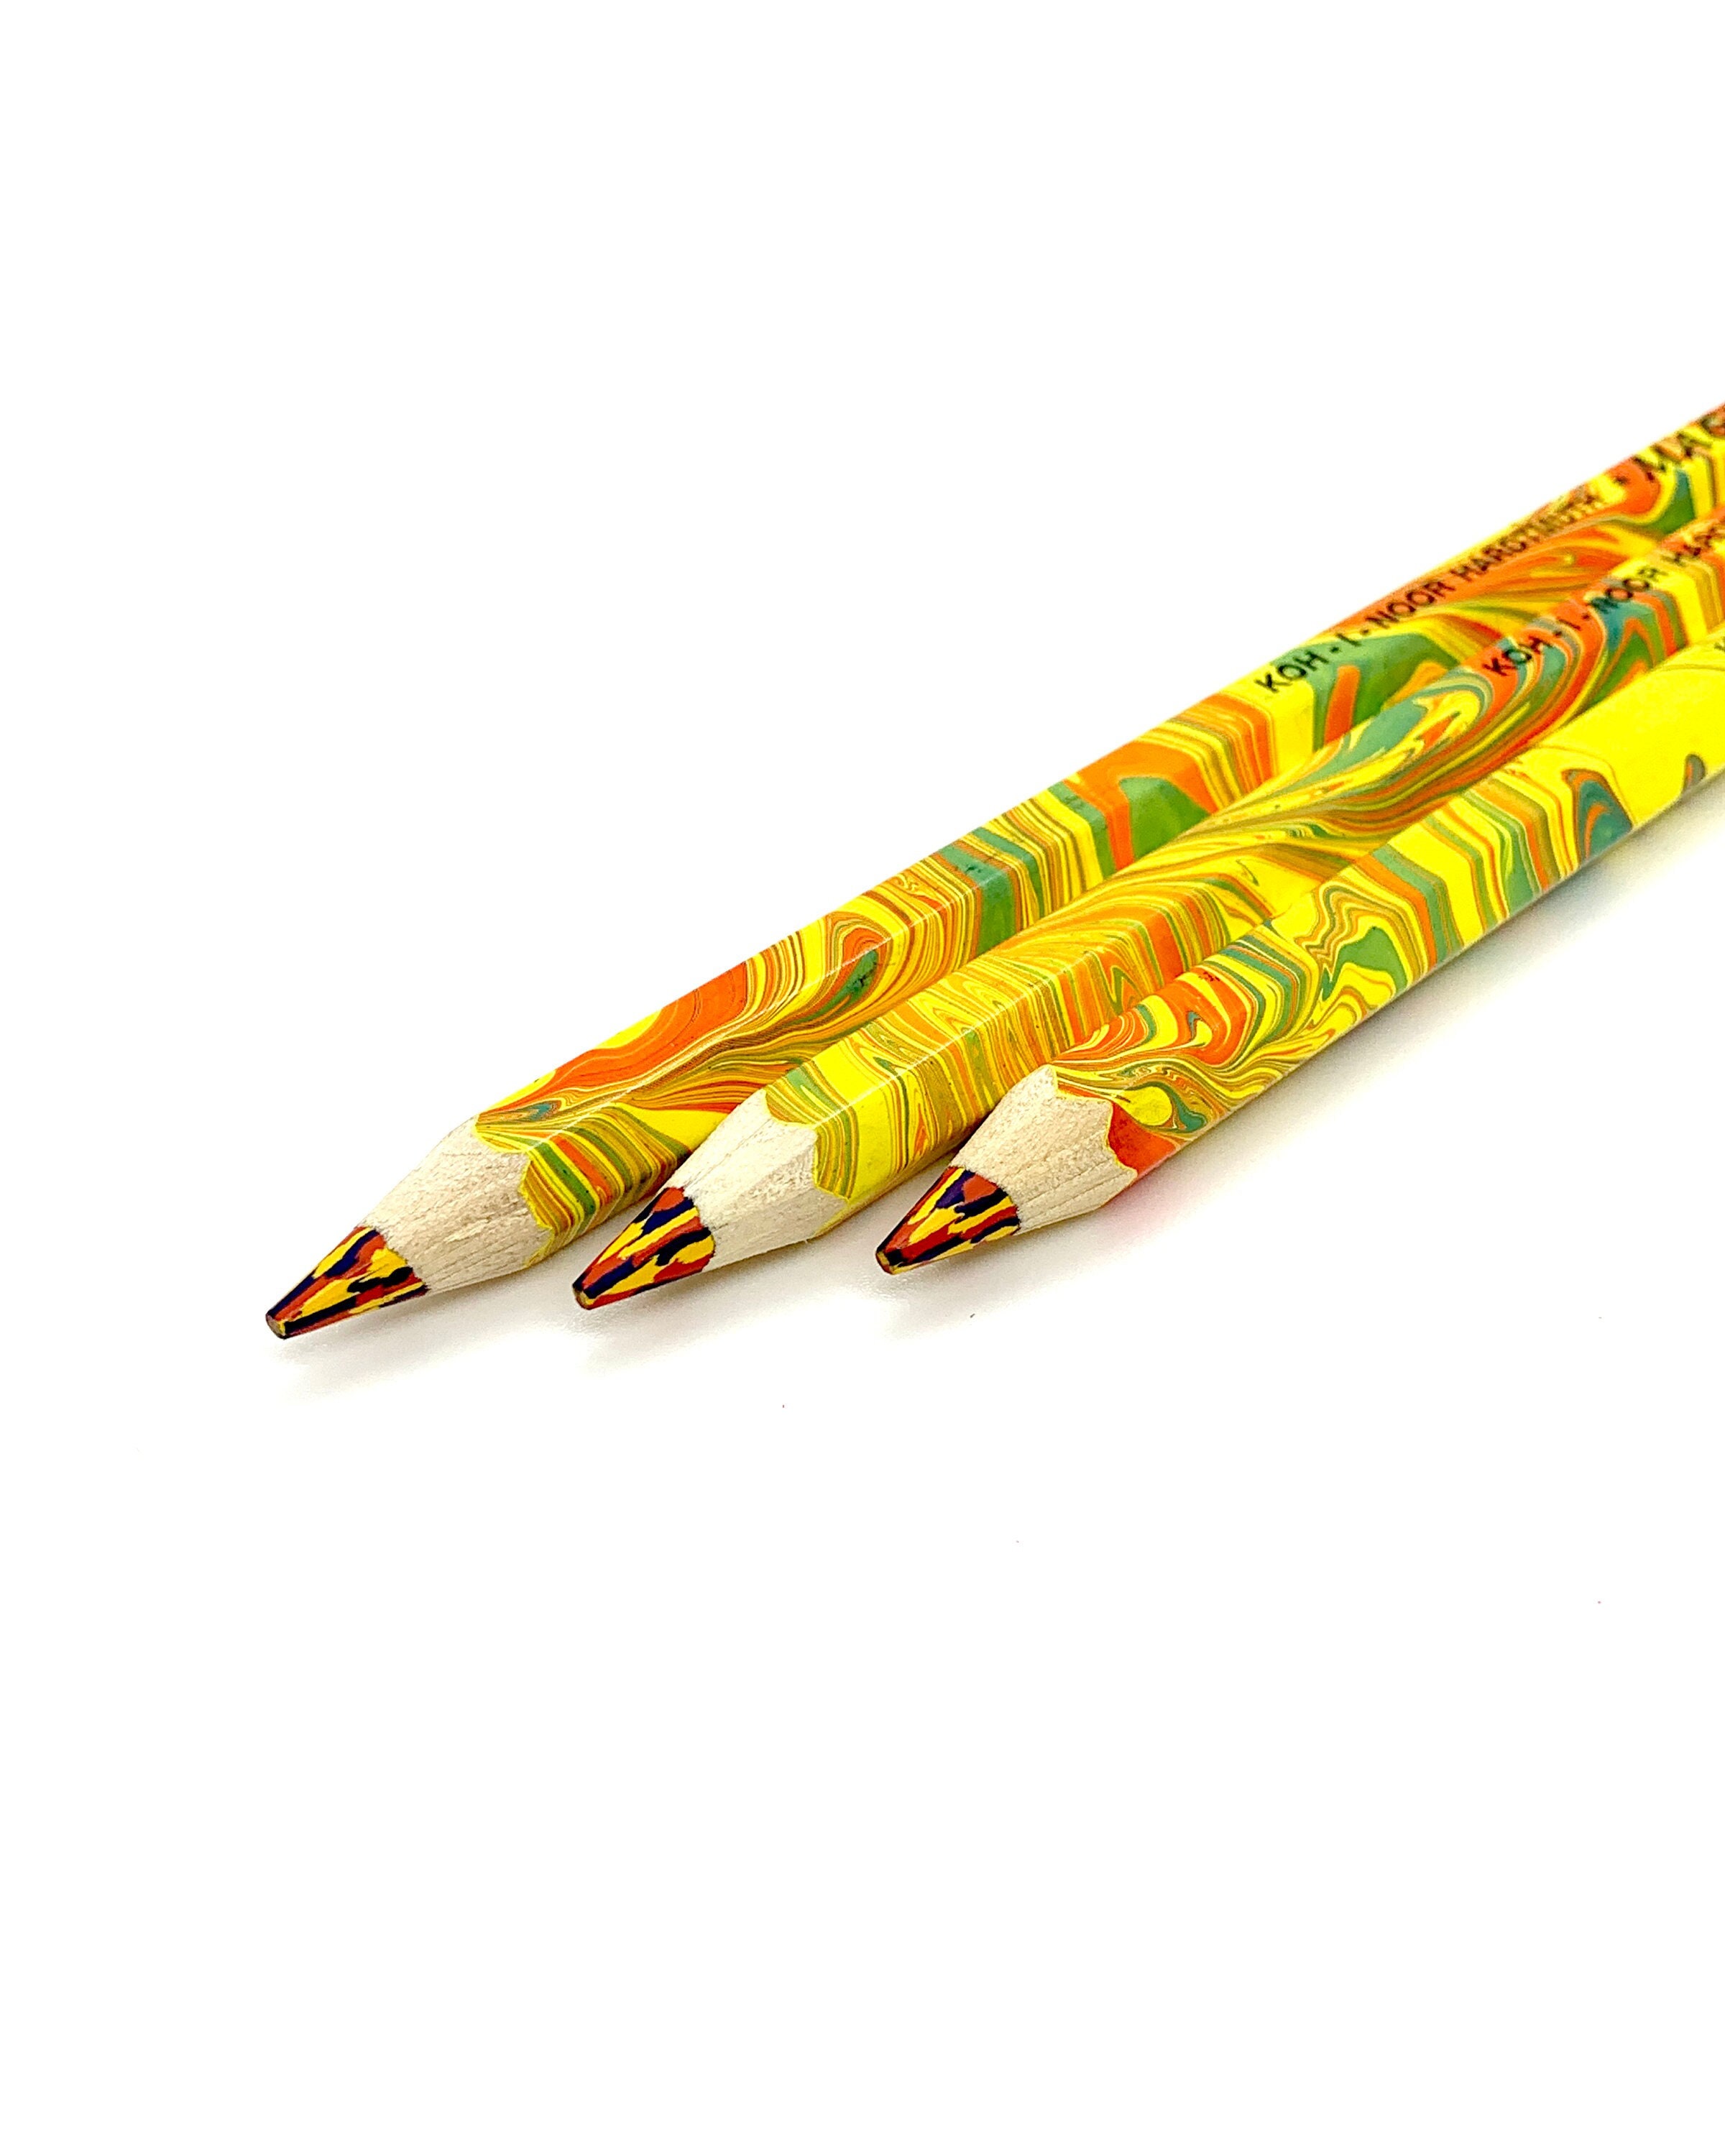 Palomino Blackwing Pencil - Pearl Finish - Balanced Graphite Pencil